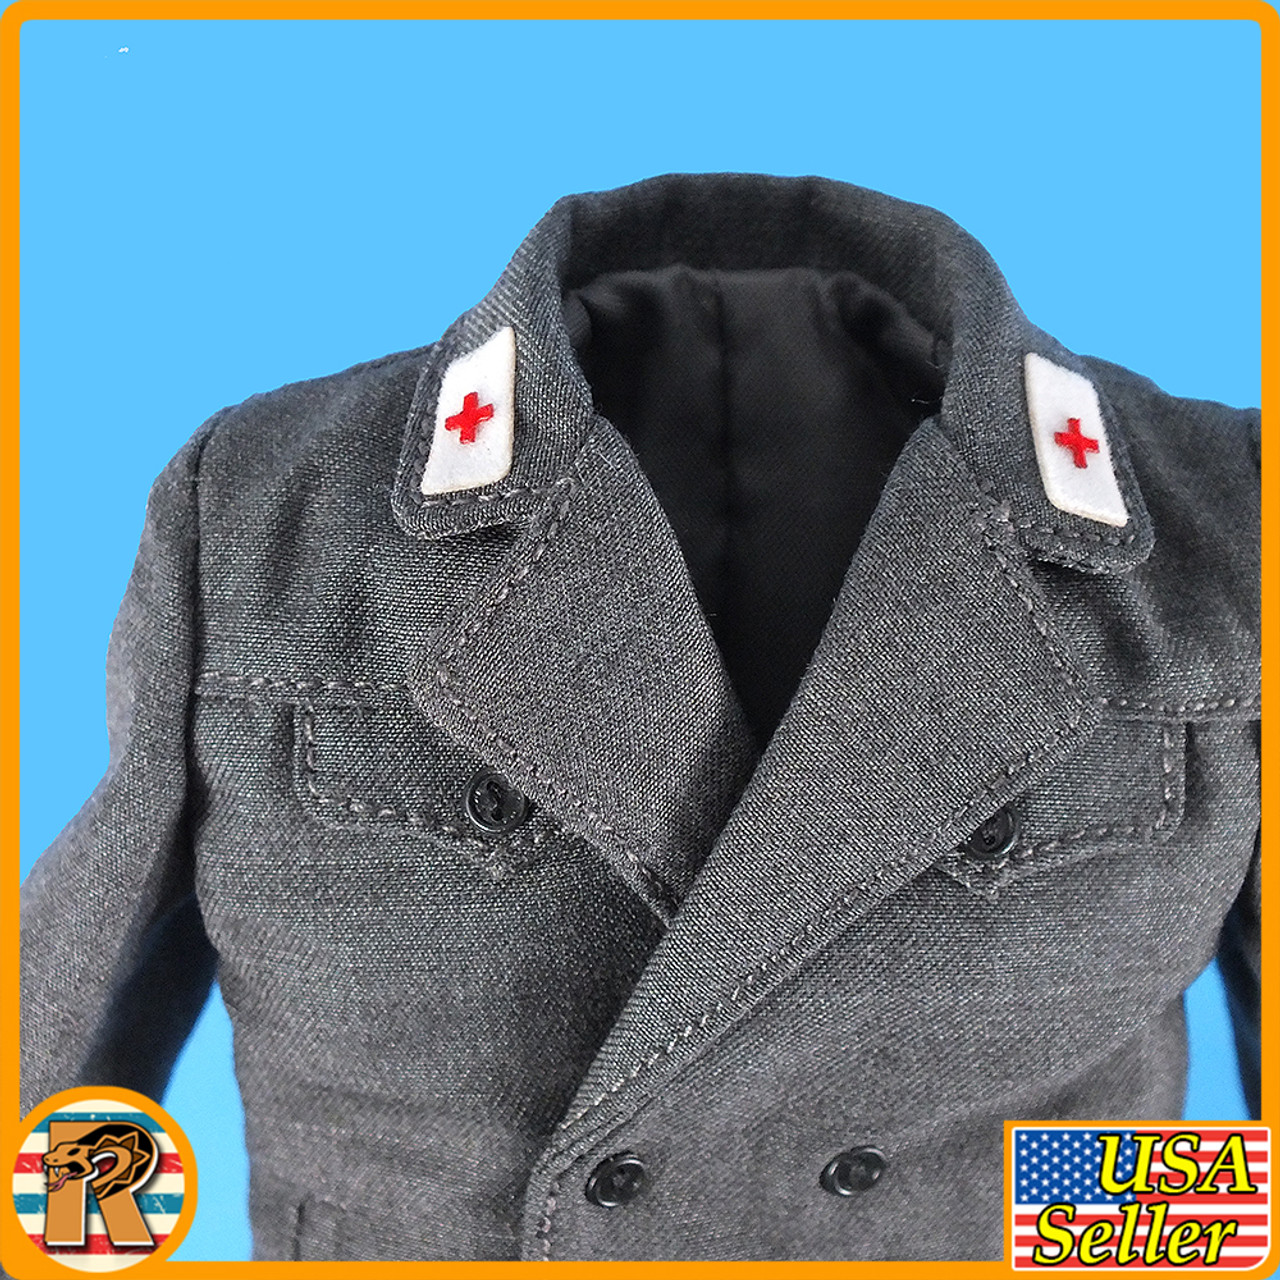 WWII German Nurse - Skirt & Shirt Uniform #5 - 1/6 Scale -